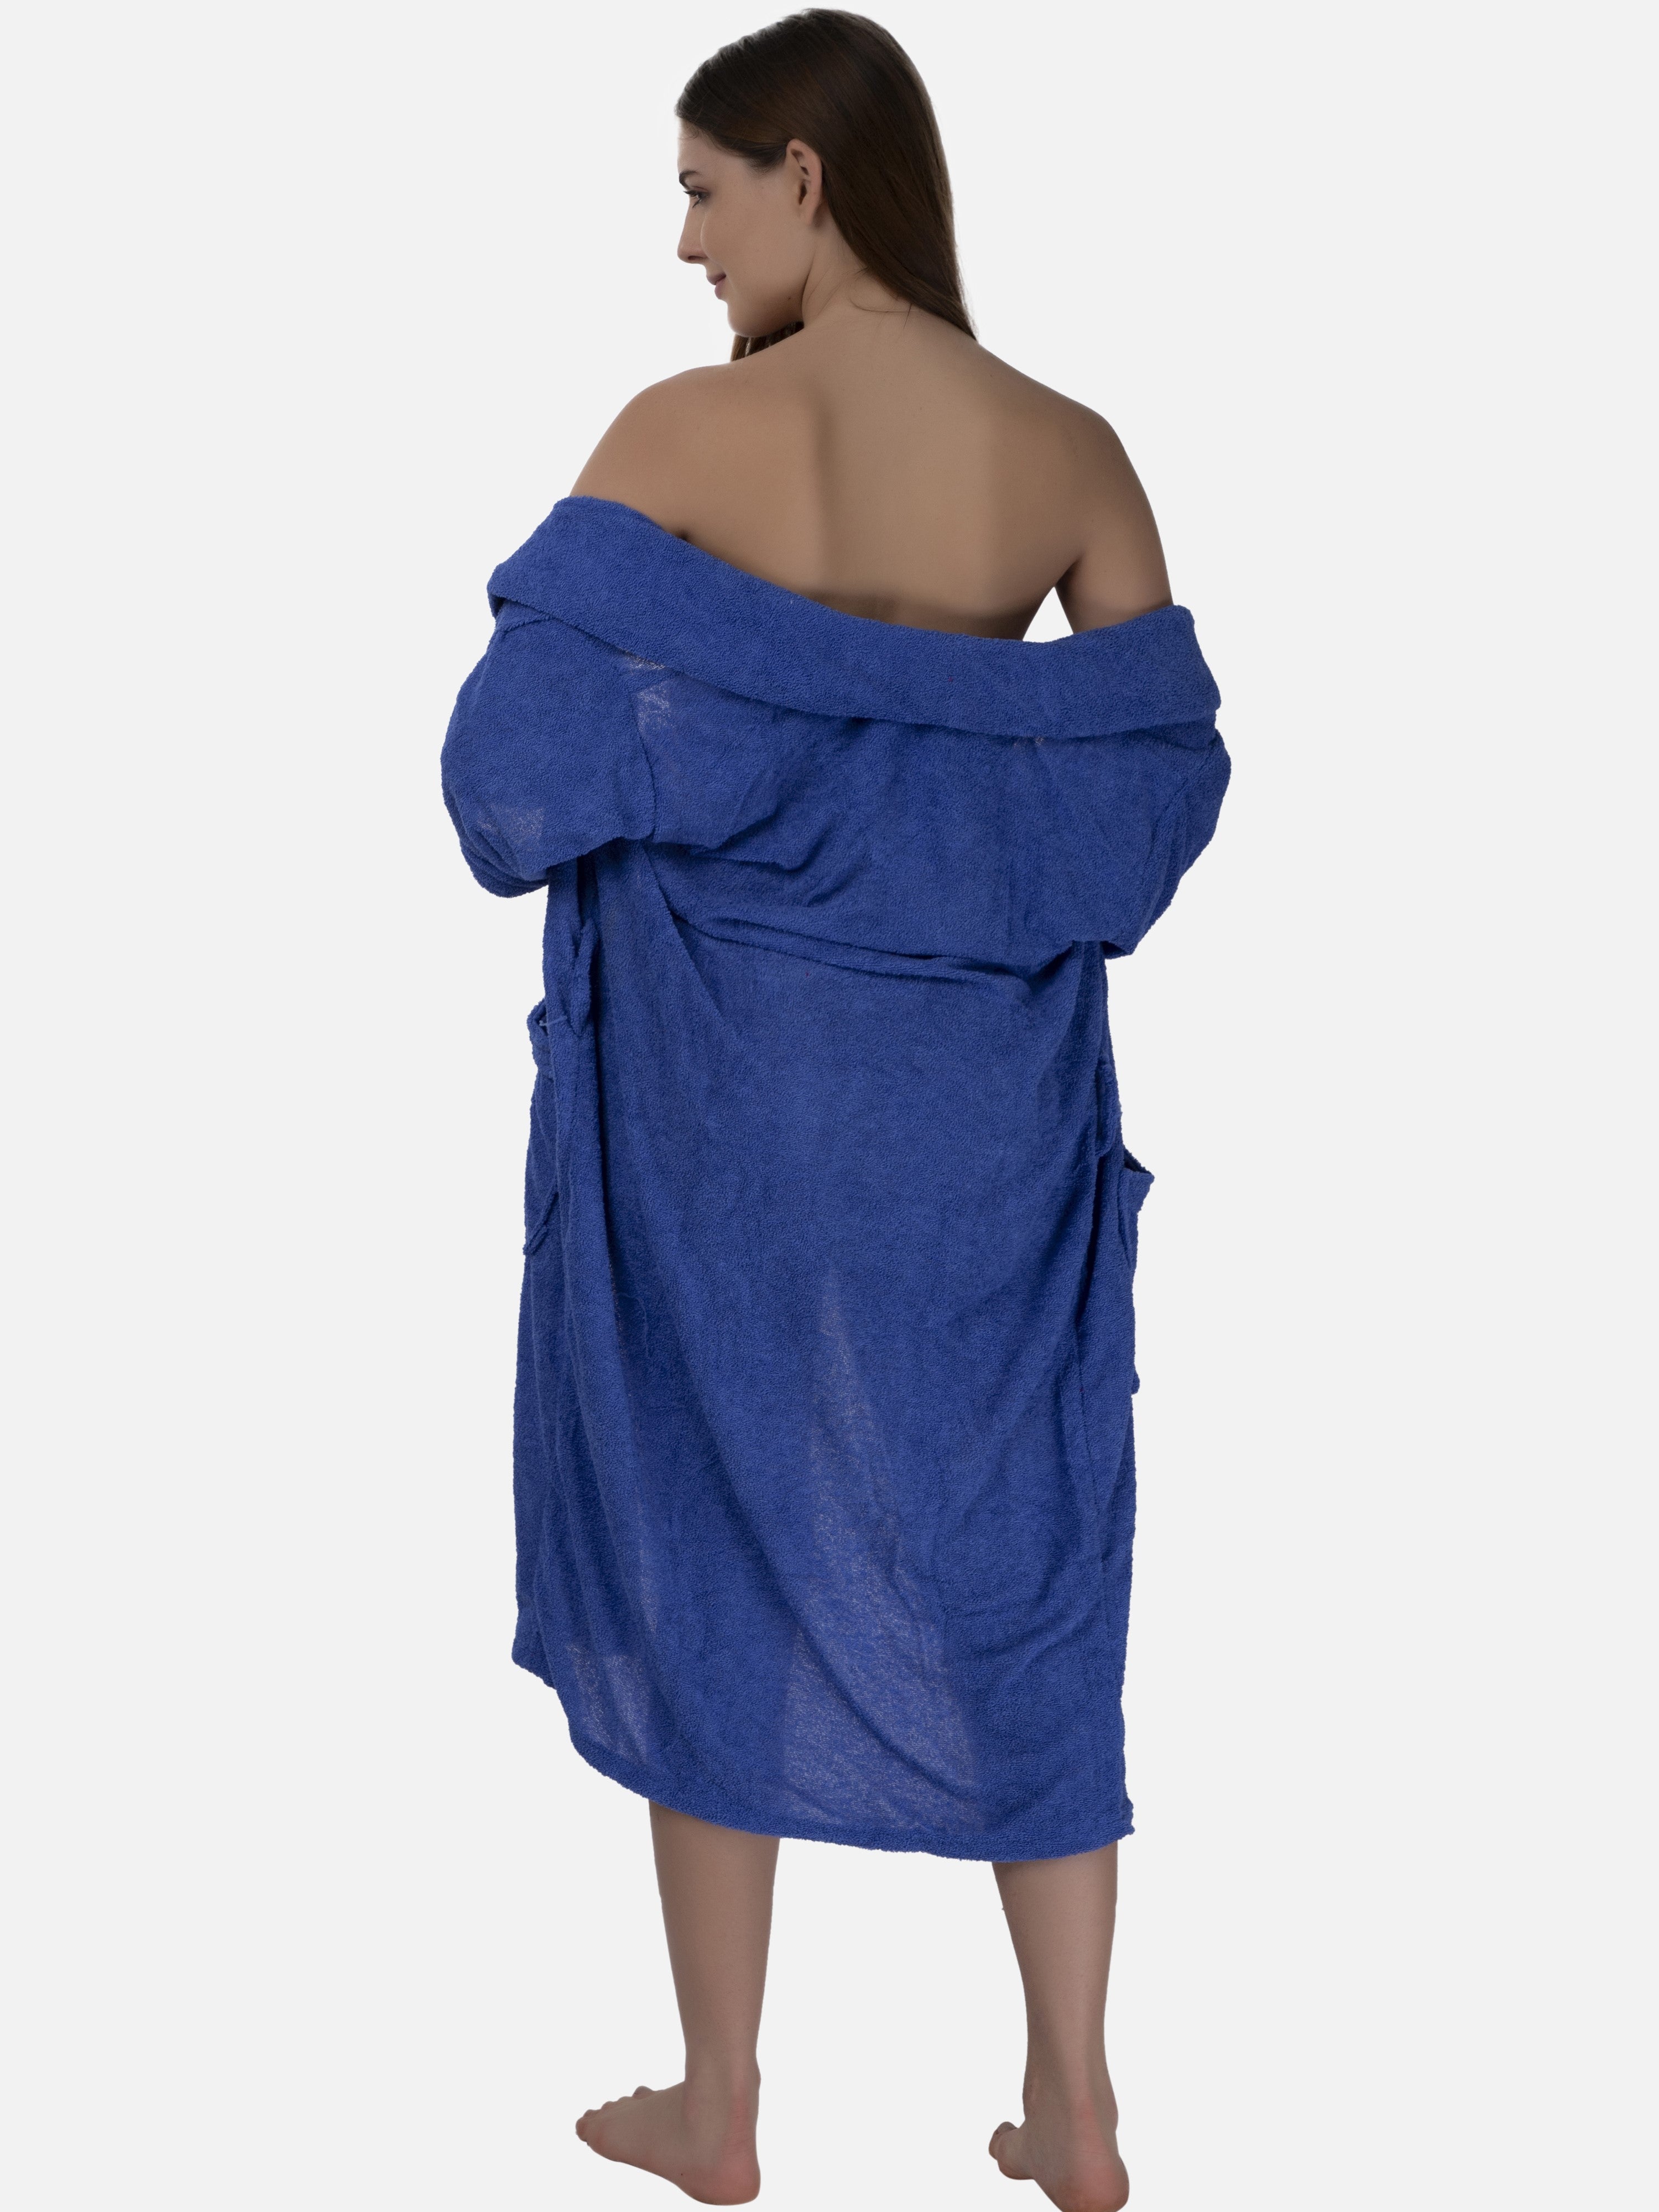 Sell/Buy Bathrobe set, towel set for men and women  http://vincentdevois.etsy.com VINCENT DEVOIS™• LUXURIOU… | Bathrobe men,  Bath towels luxury, Bath robes for women